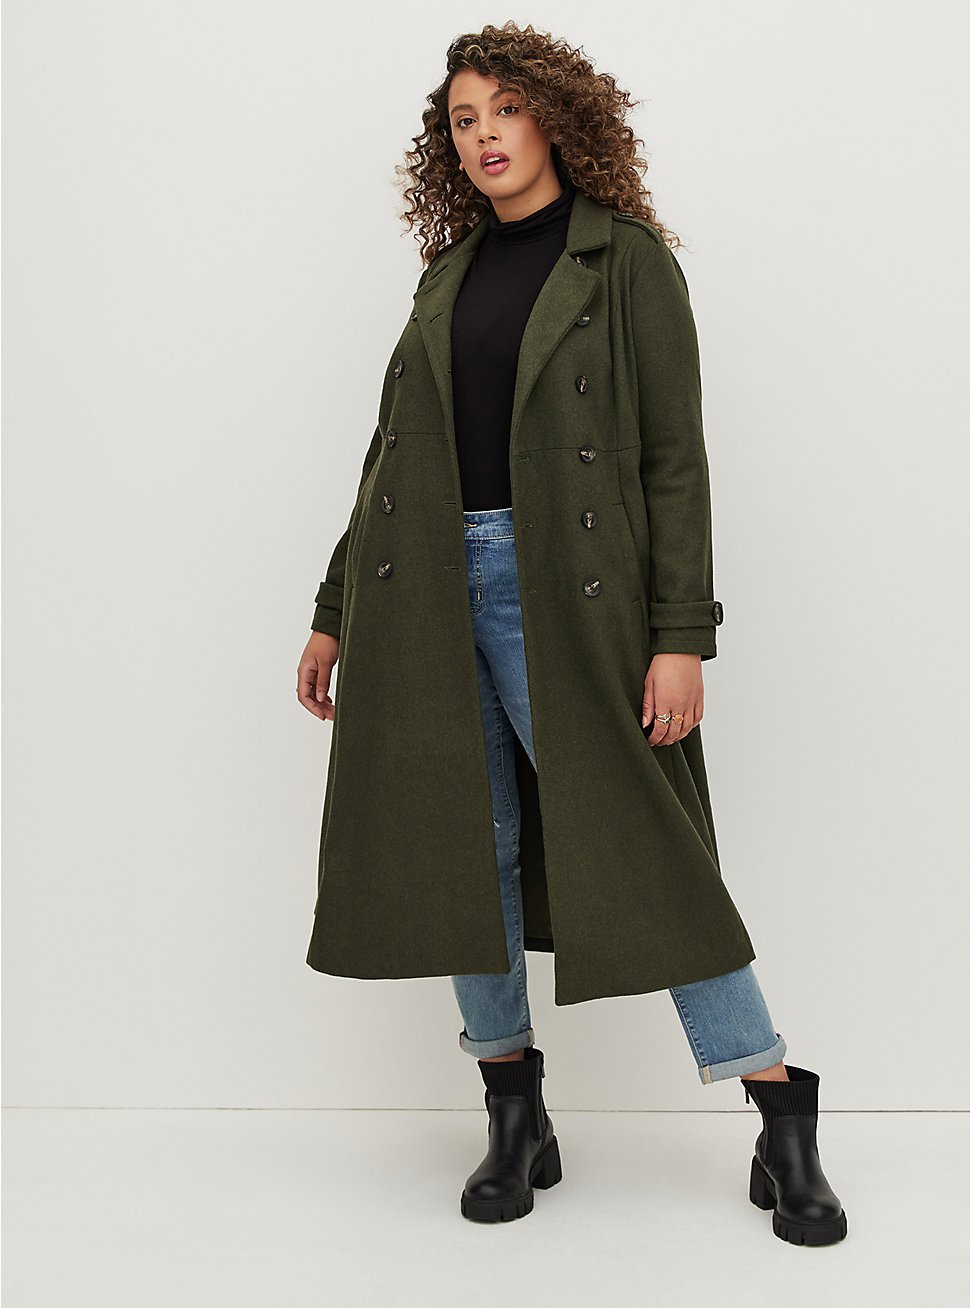 Fit & Flare Military Coat - Wool Olive Green, DEEP DEPTHS, hi-res